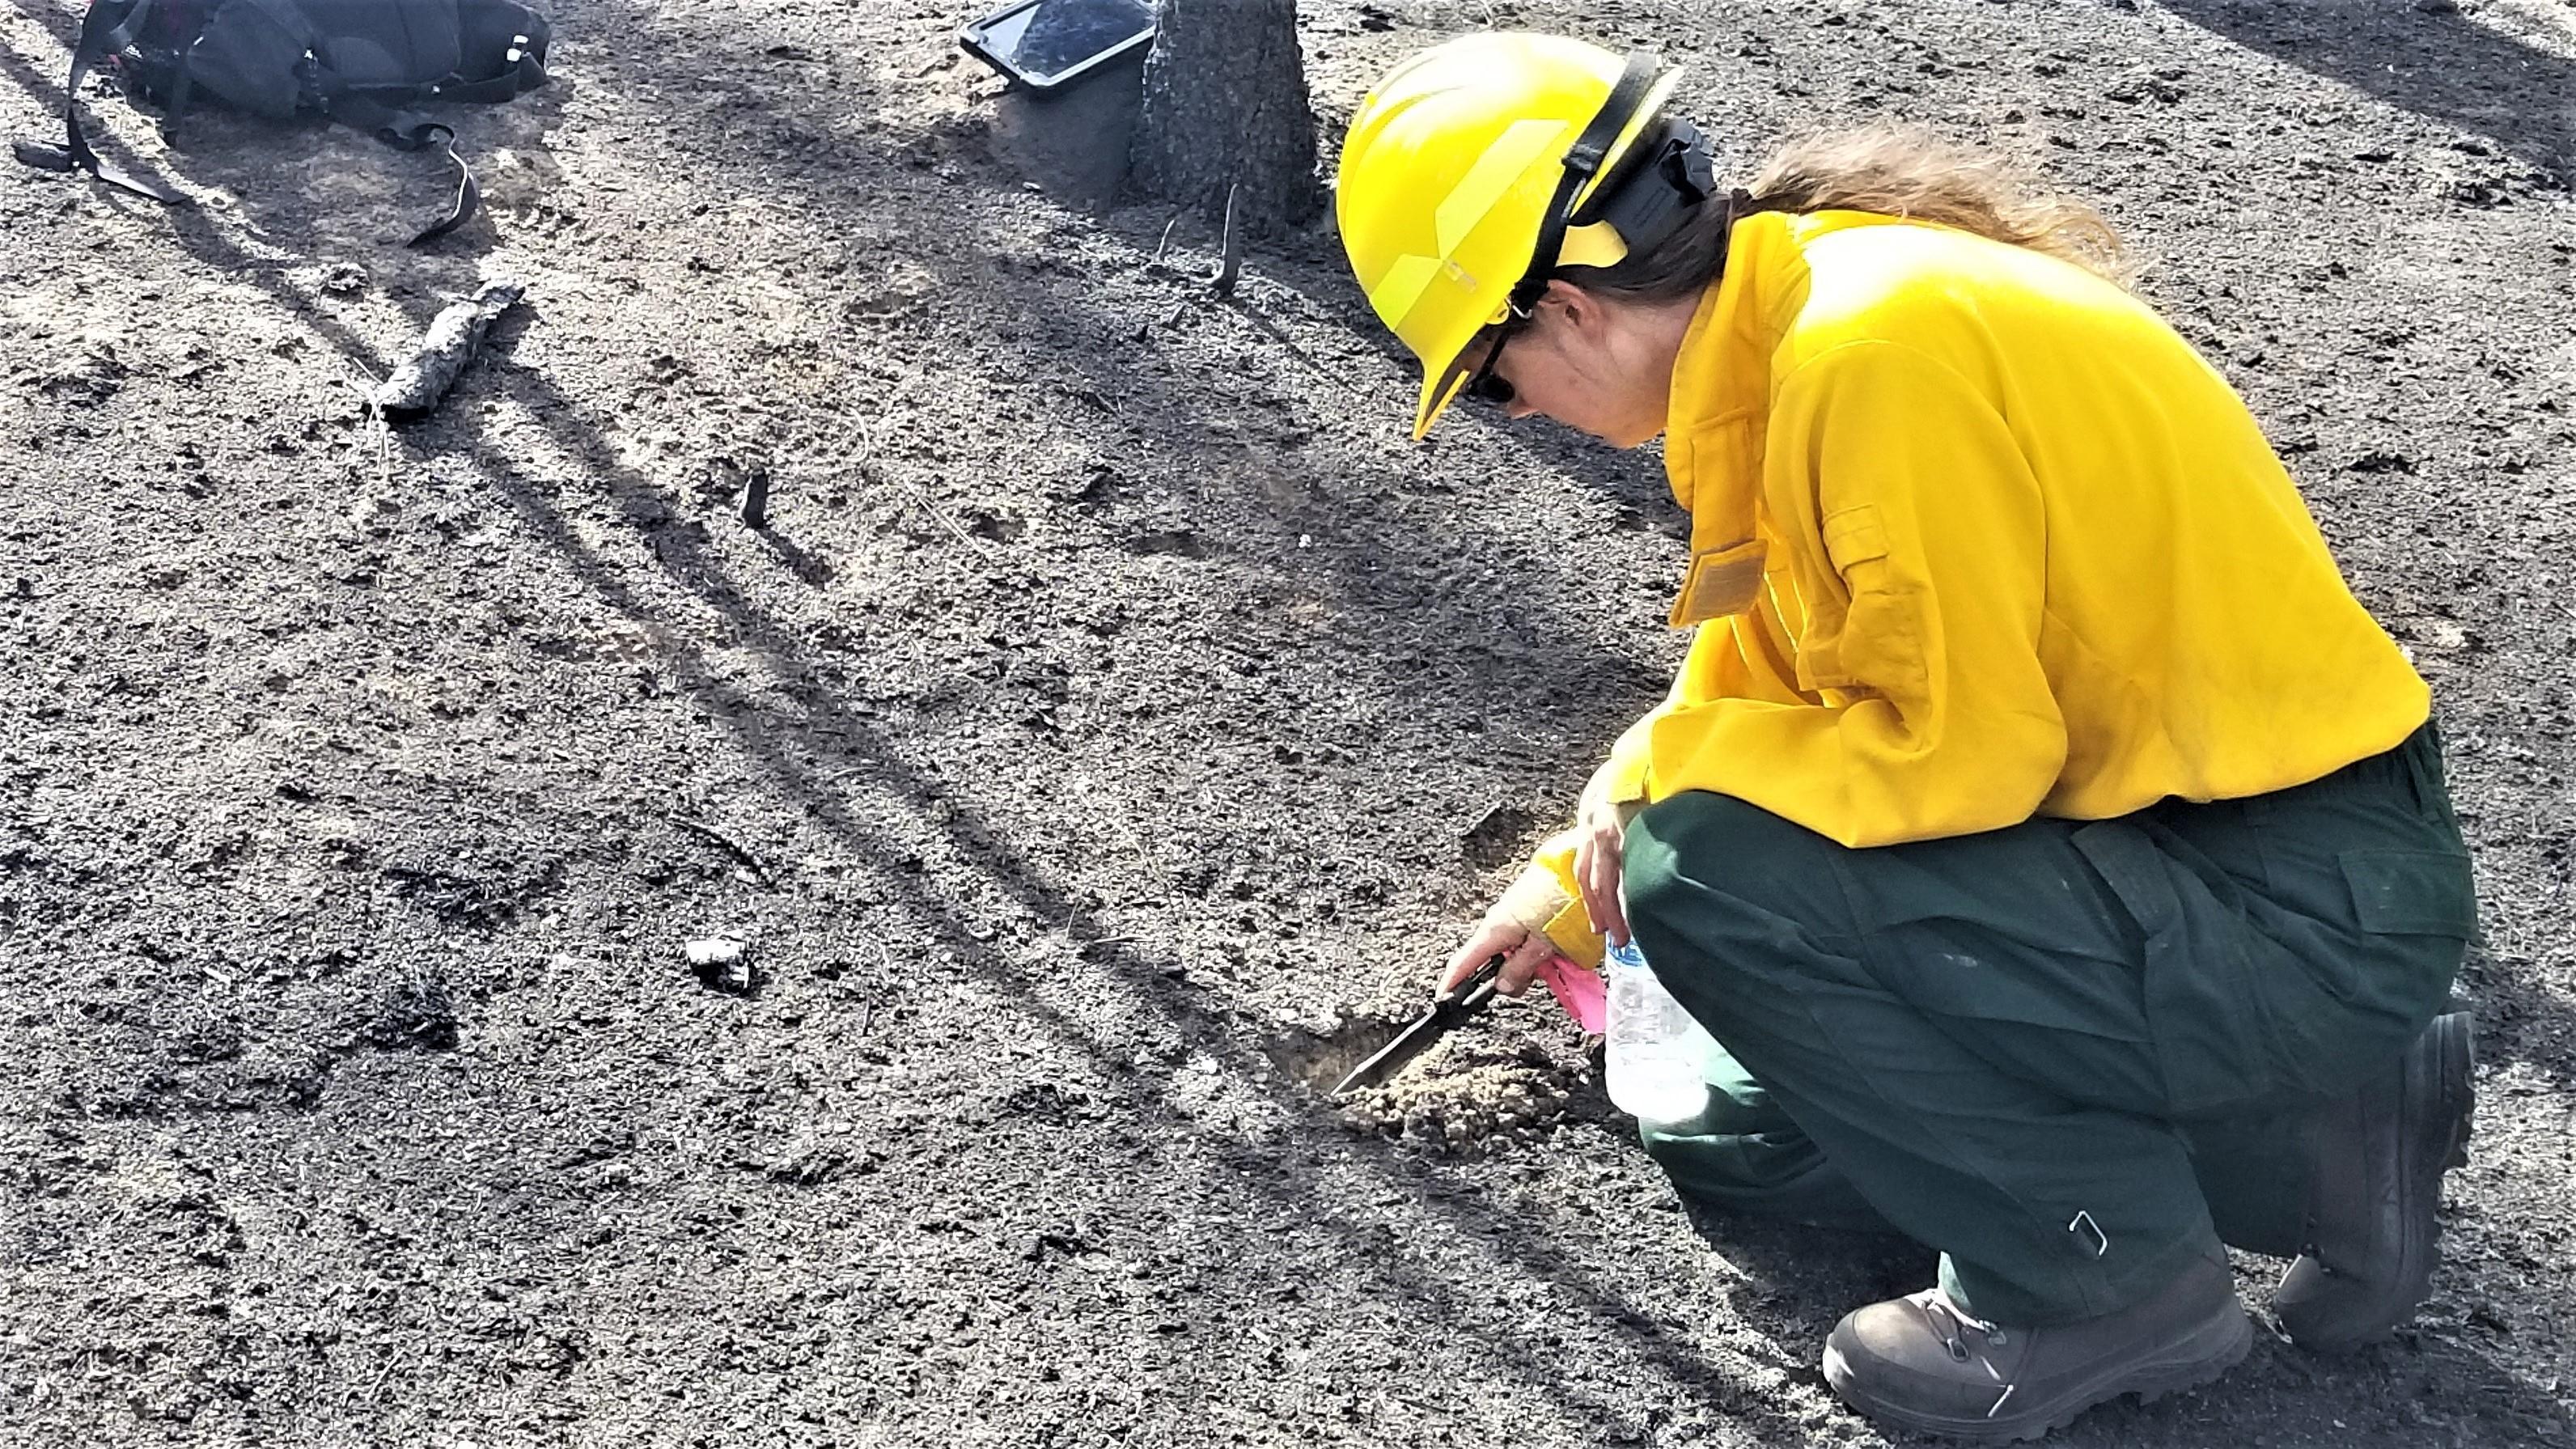 Image showing BAER Specialist Susan Roe evaluating soil burn severity